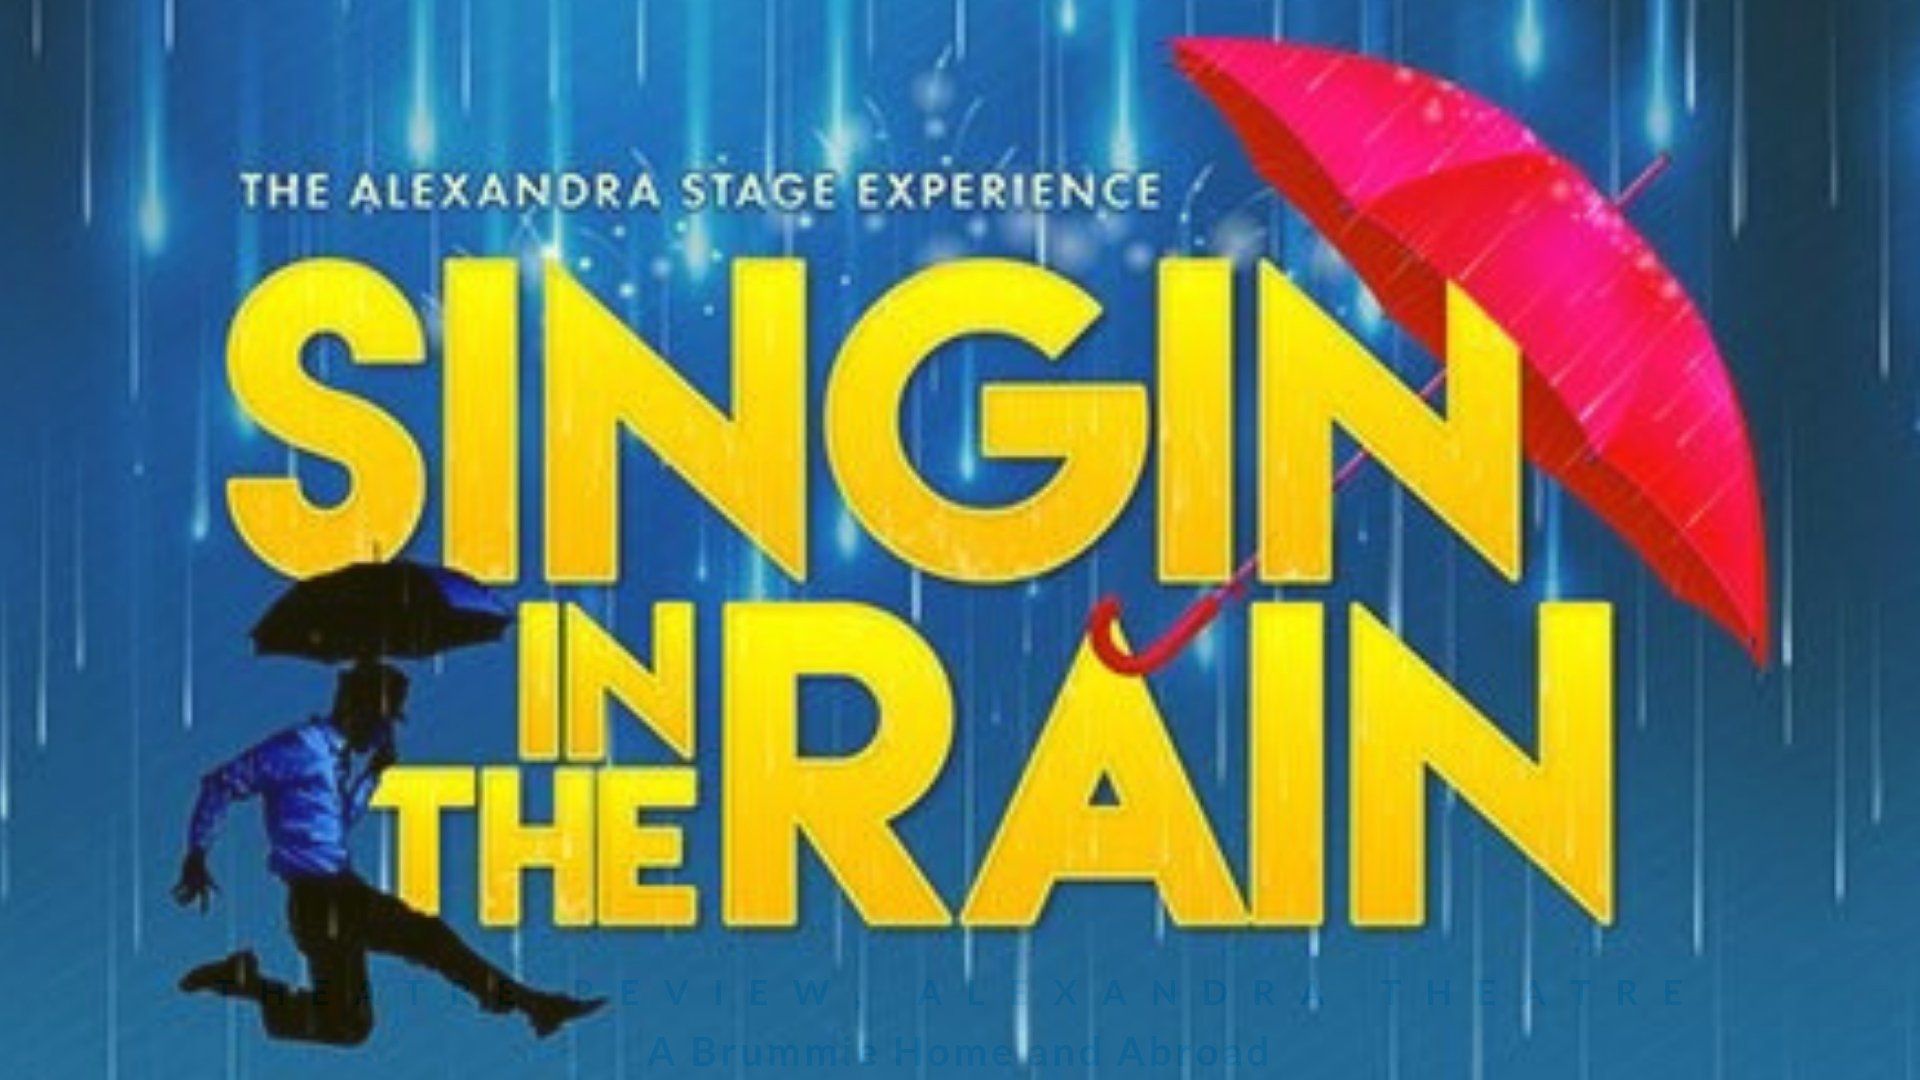 Theatre Review: Singin' in the Rain